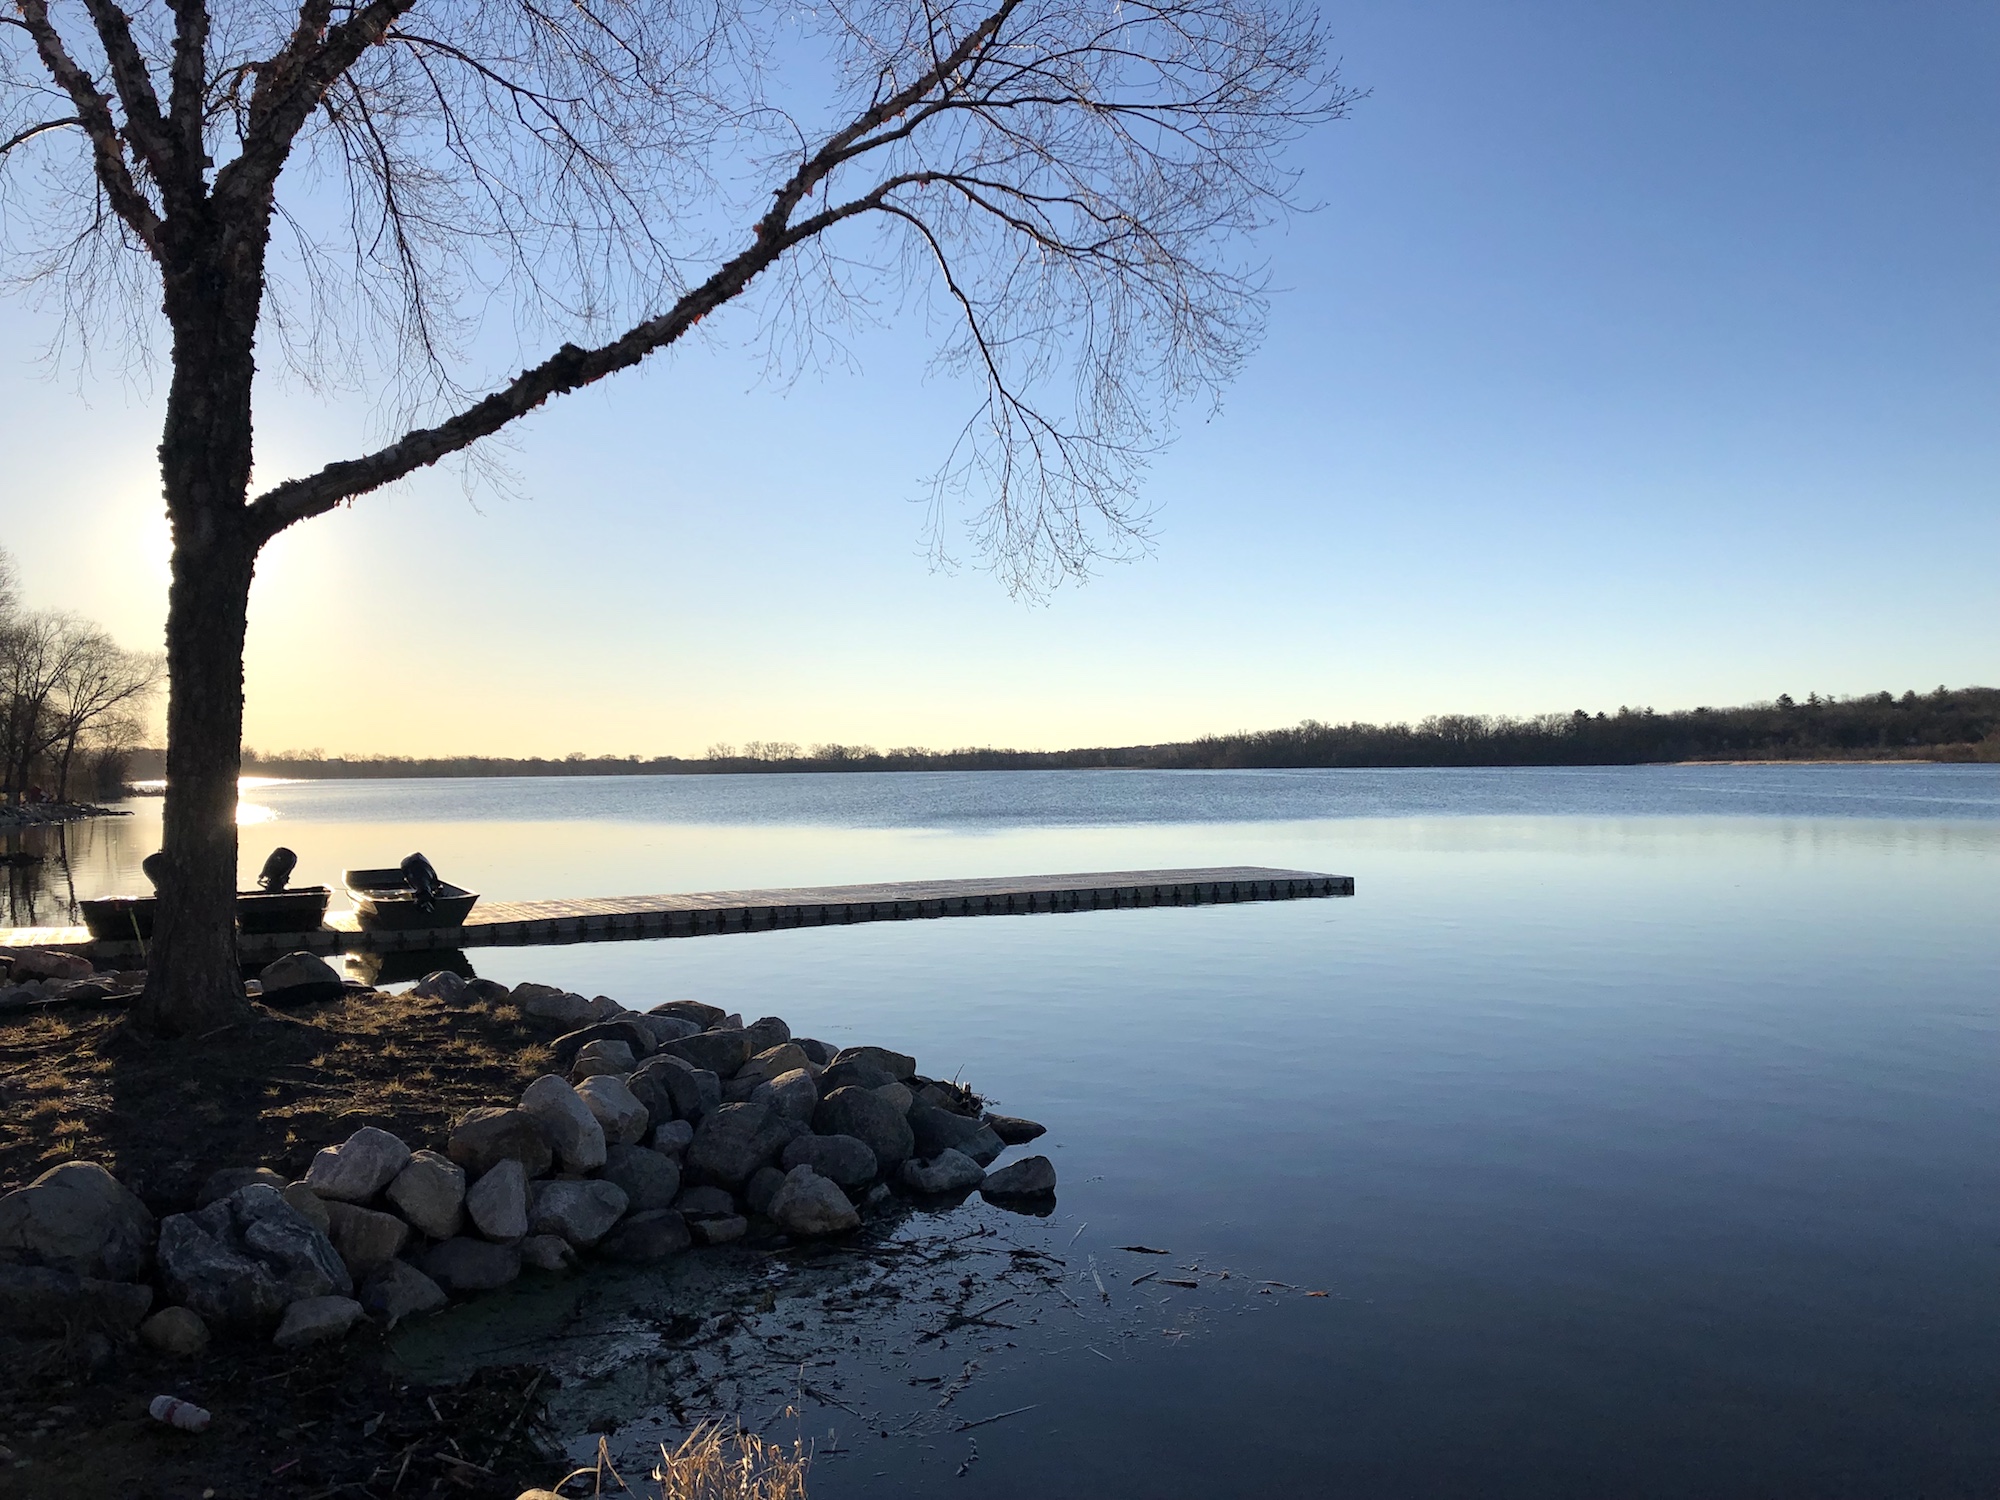 Lake Wingra on April 9, 2019.